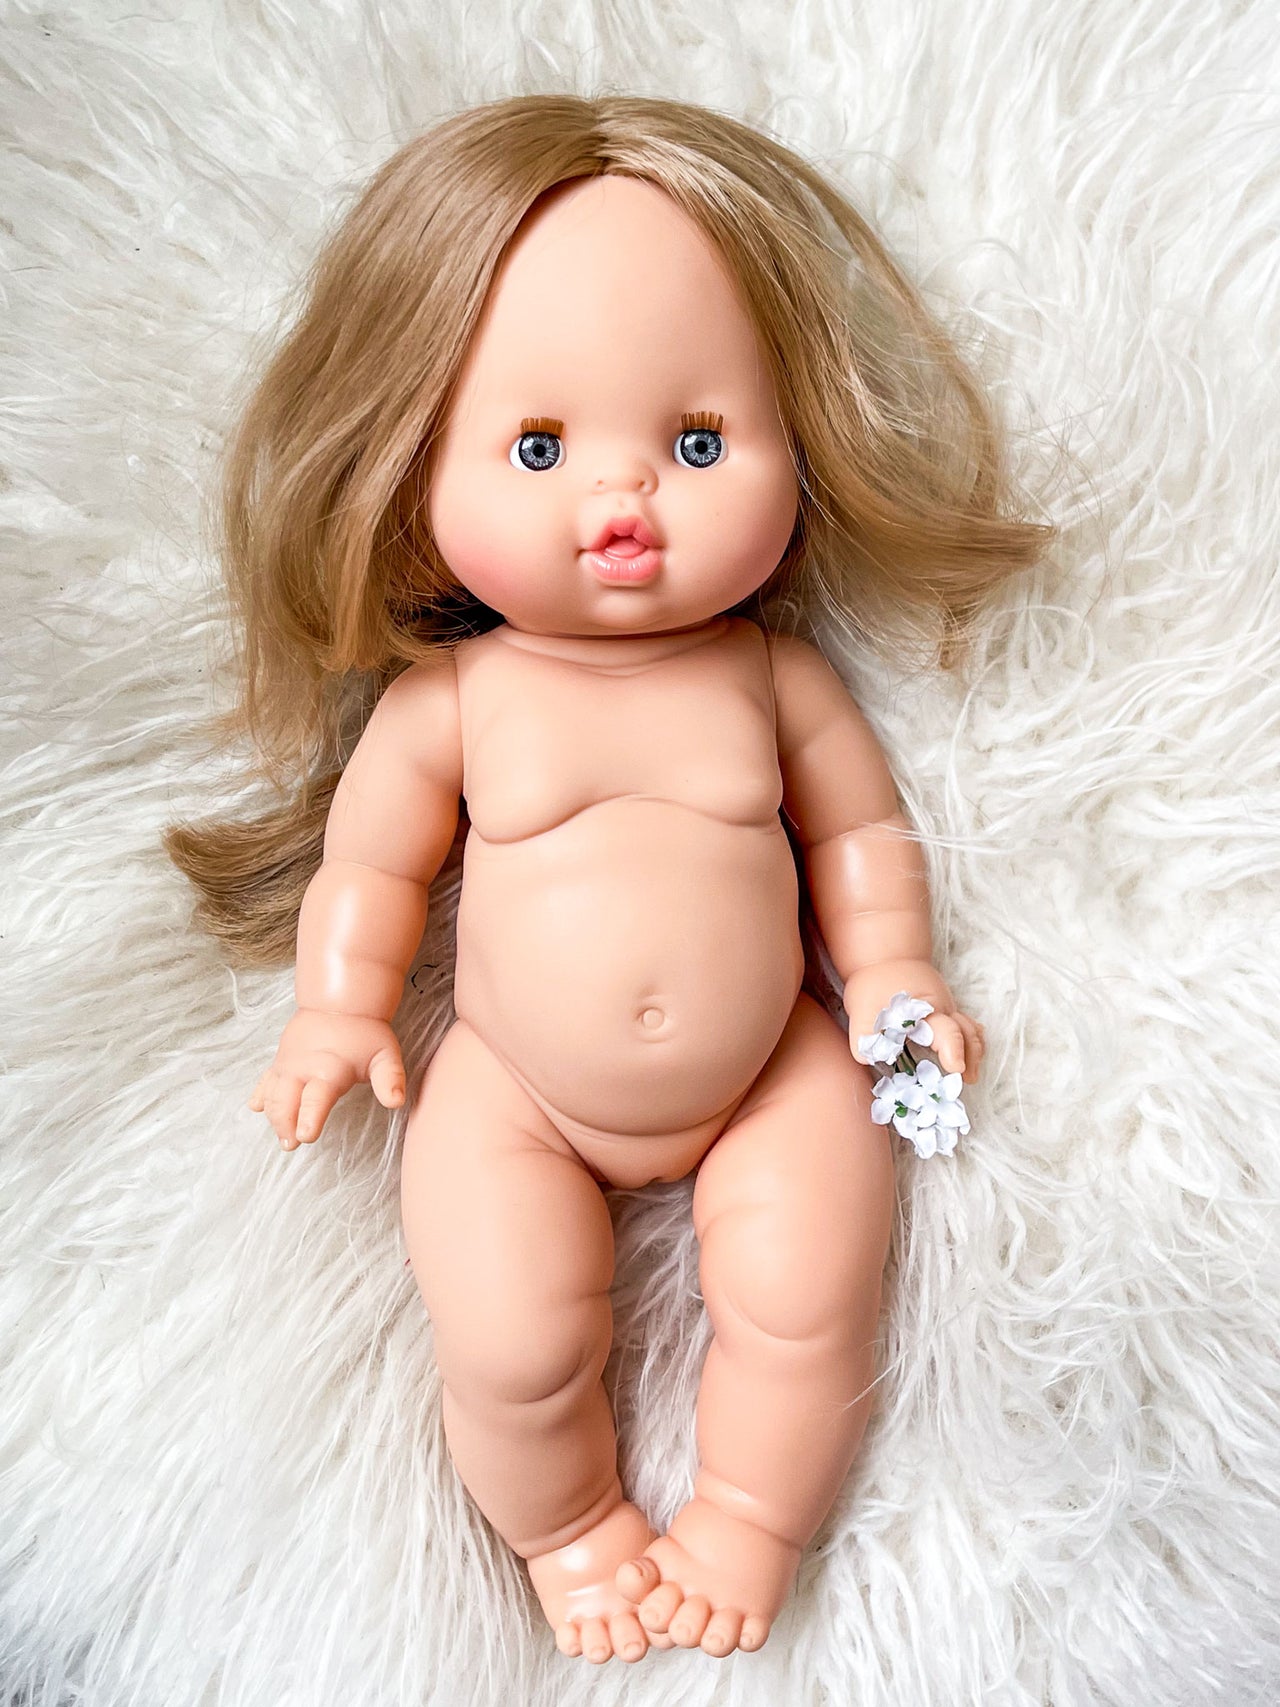 Minikane Eleanor (Alienor) Baby Girl Doll